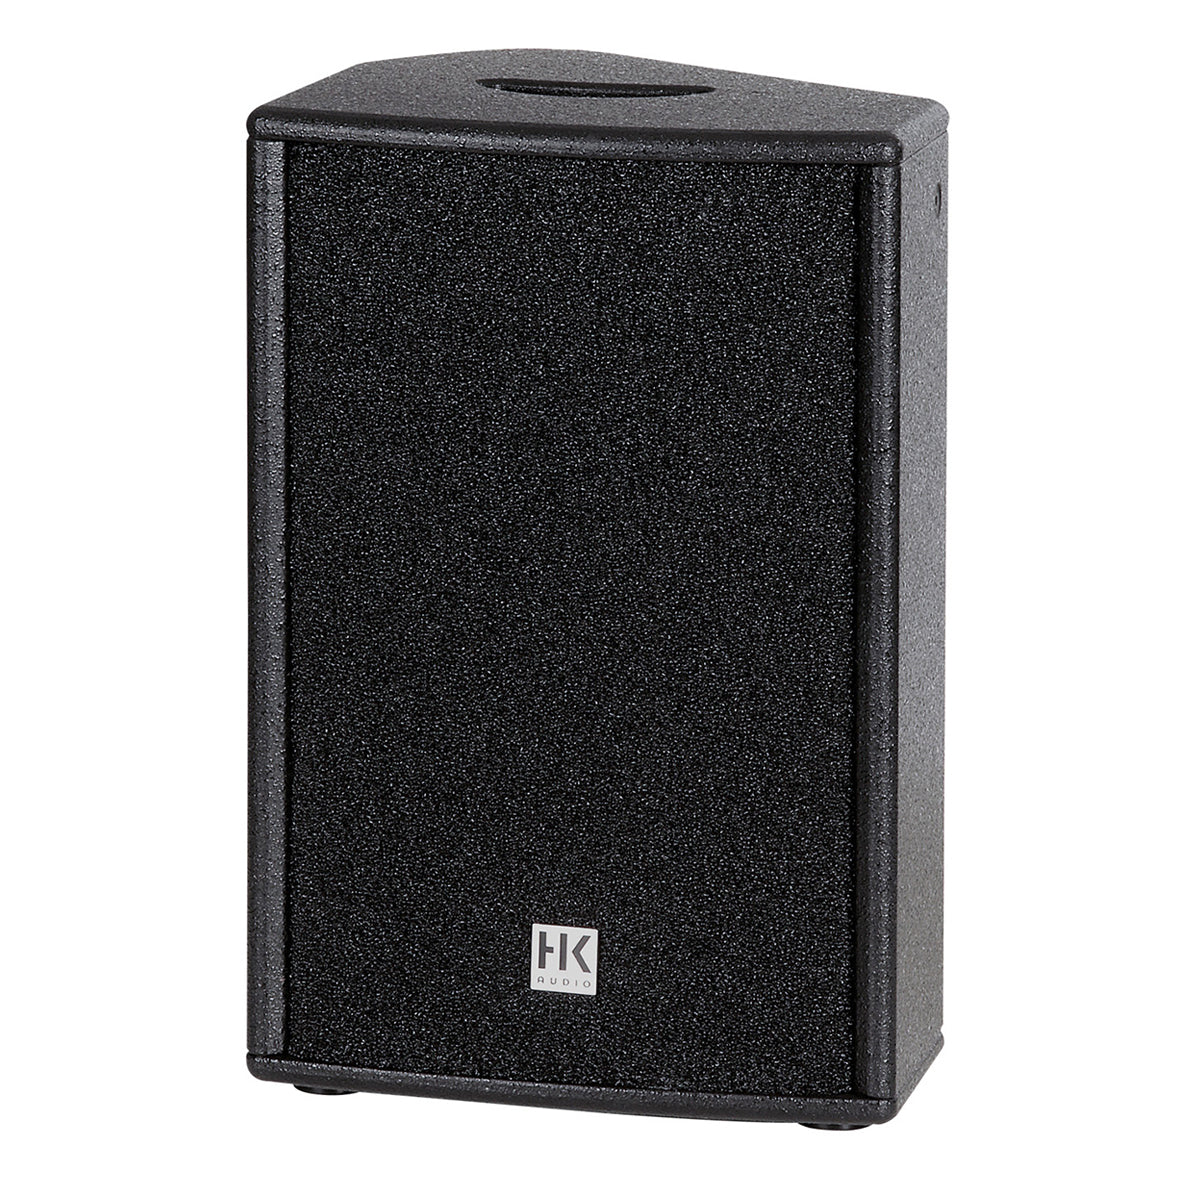 HK Audio PREMIUM PR:O 10X 10-inch 300W Passive PA Loudspeaker